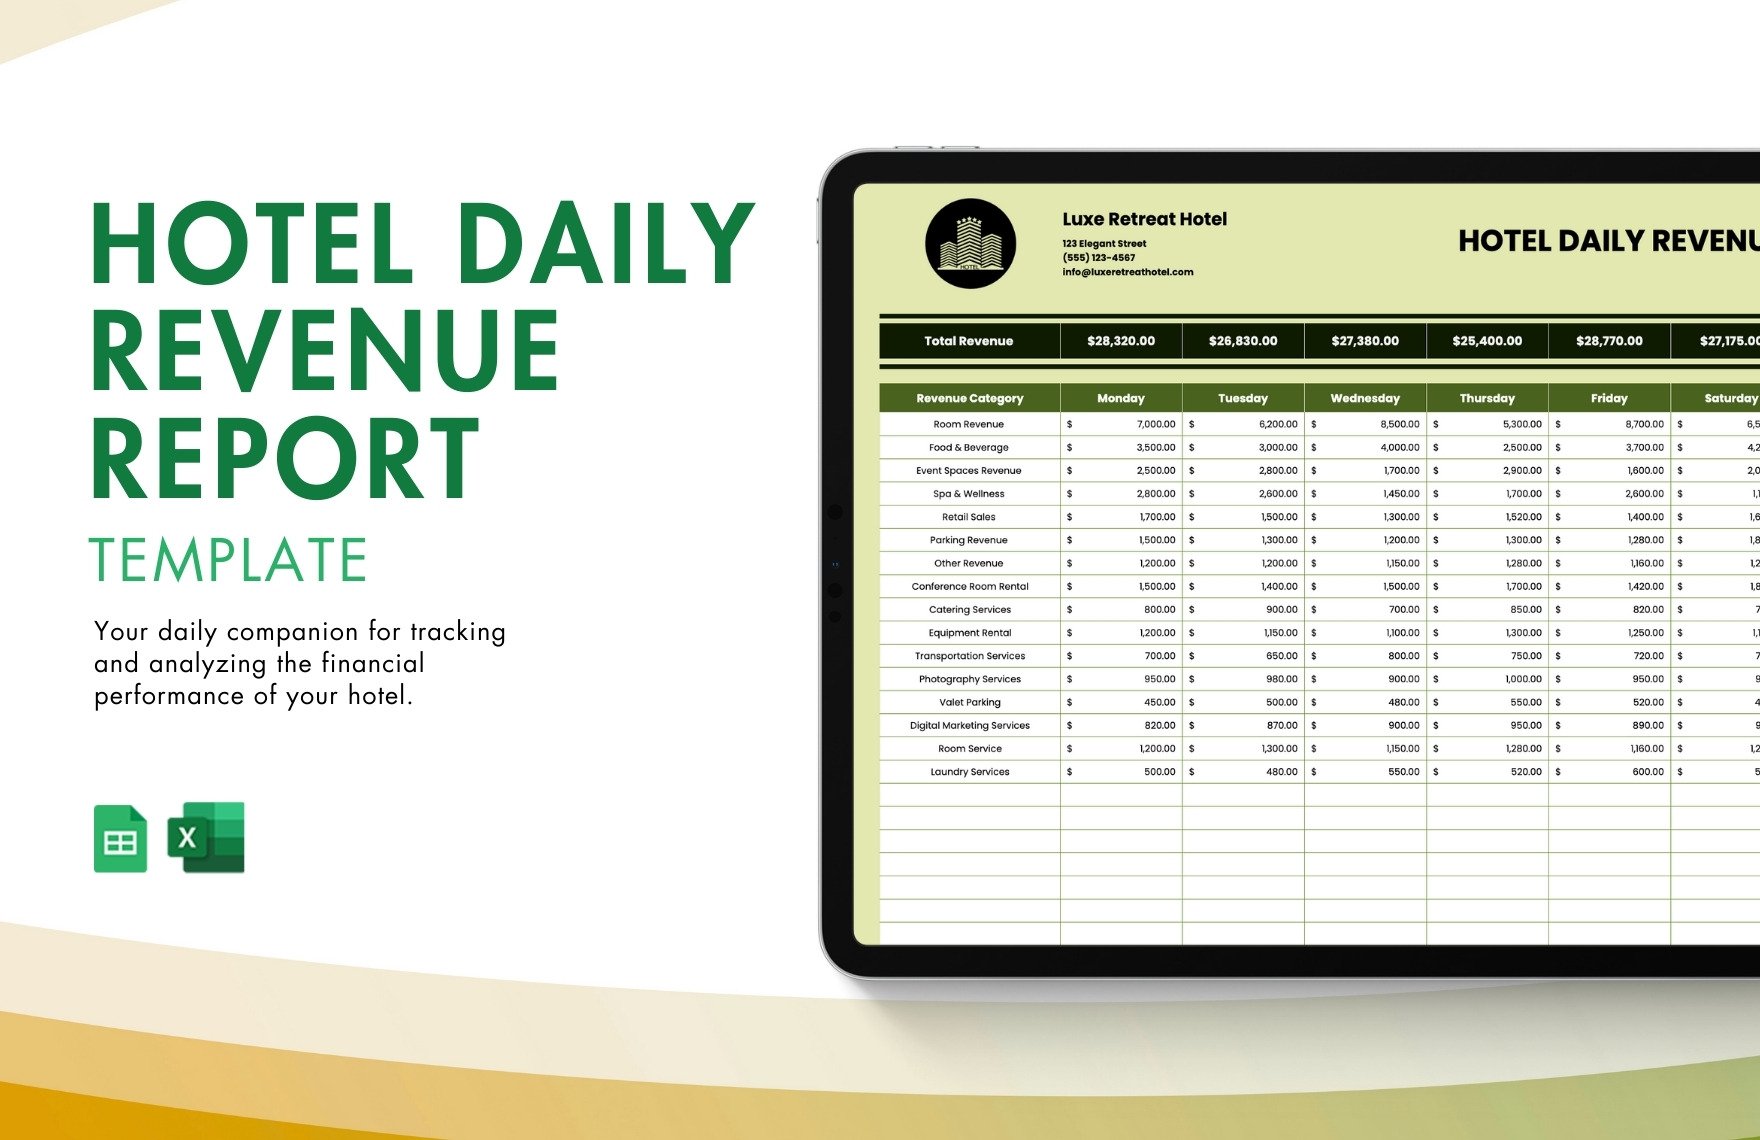 Hotel Daily Revenue Report Template